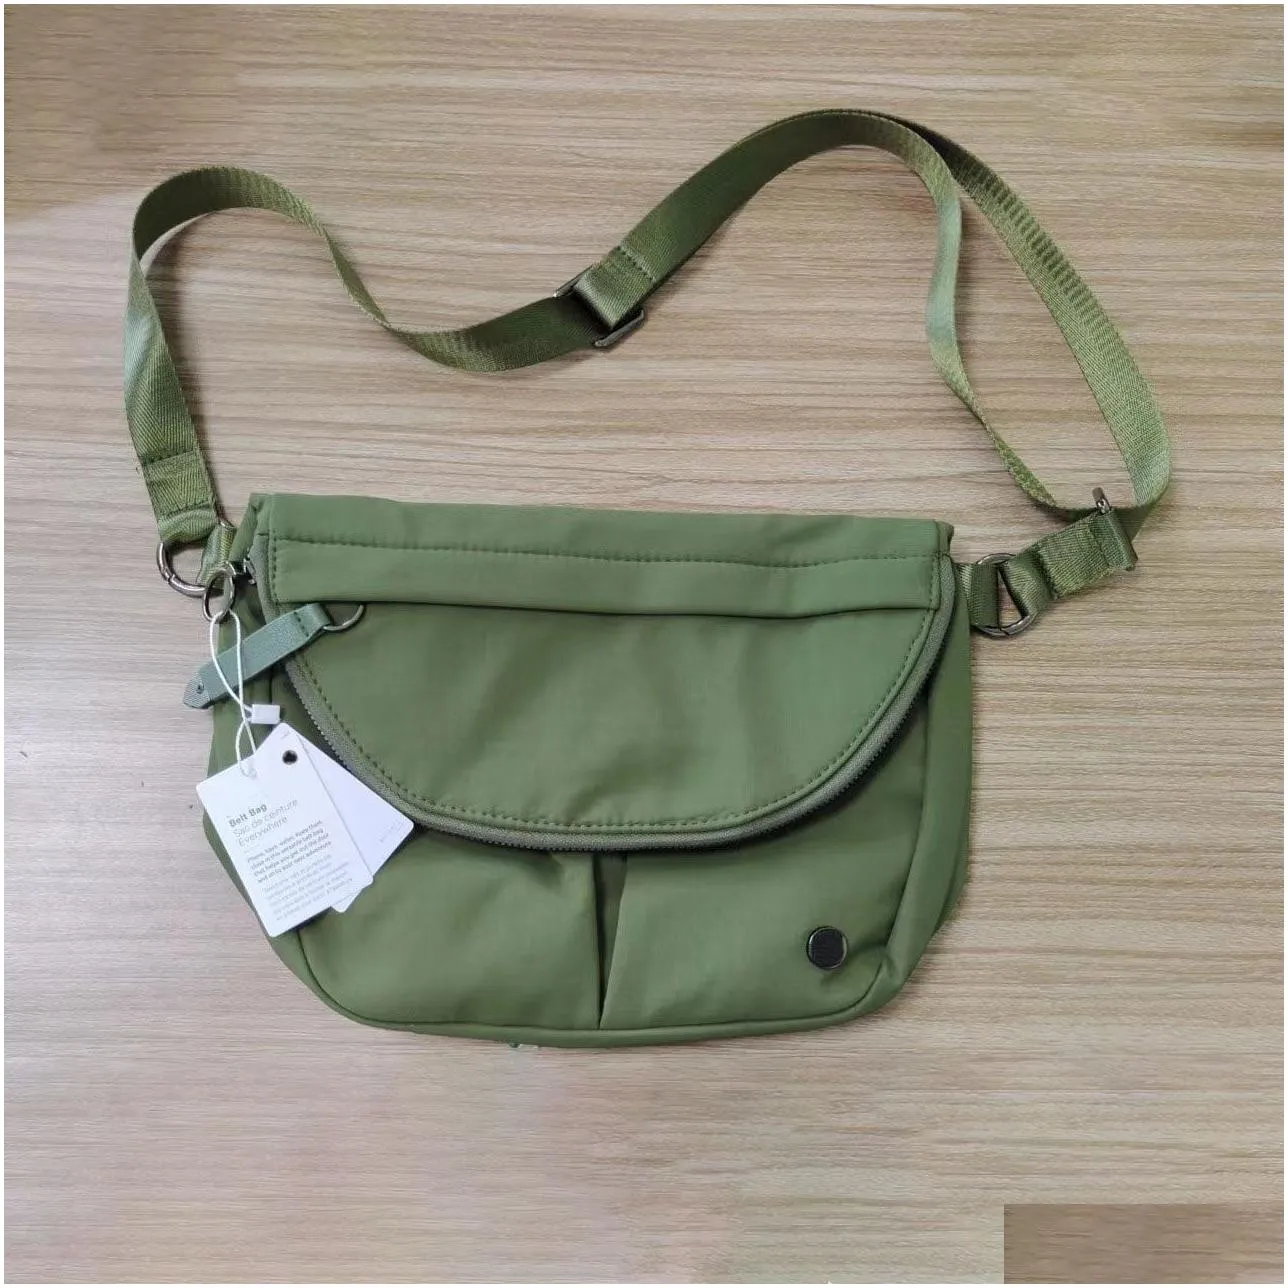 ll festival bag women shoulder bag have adjustable strap yoga bags waterrepellent zipper outdoor crossbody